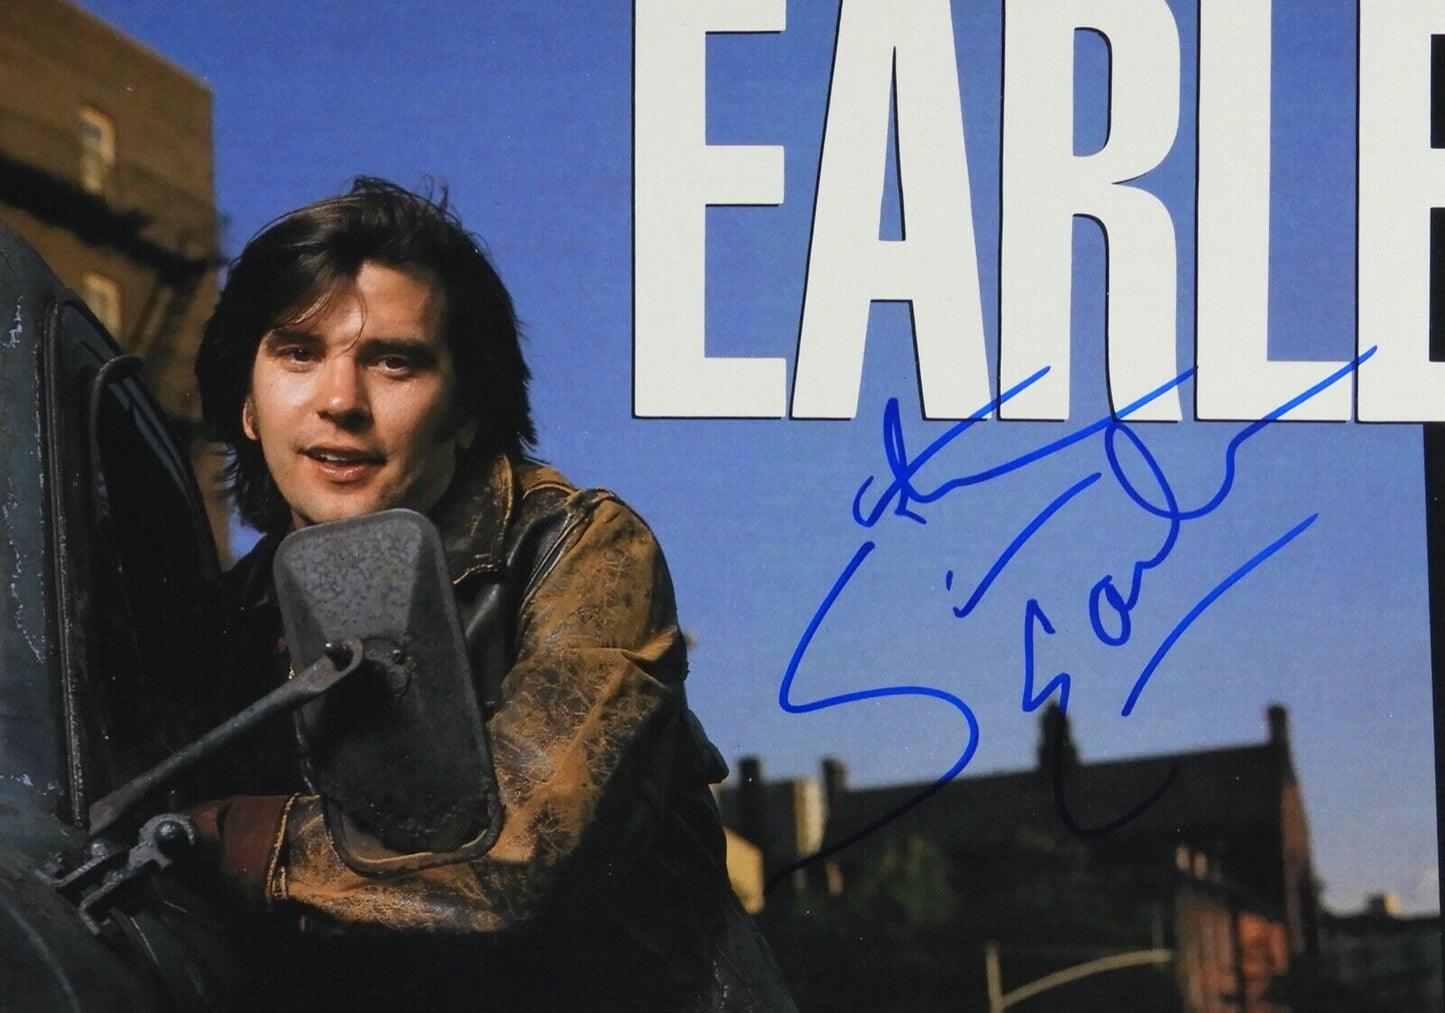 Steve Earle JSA Signed Autograph Album Record Vinyl